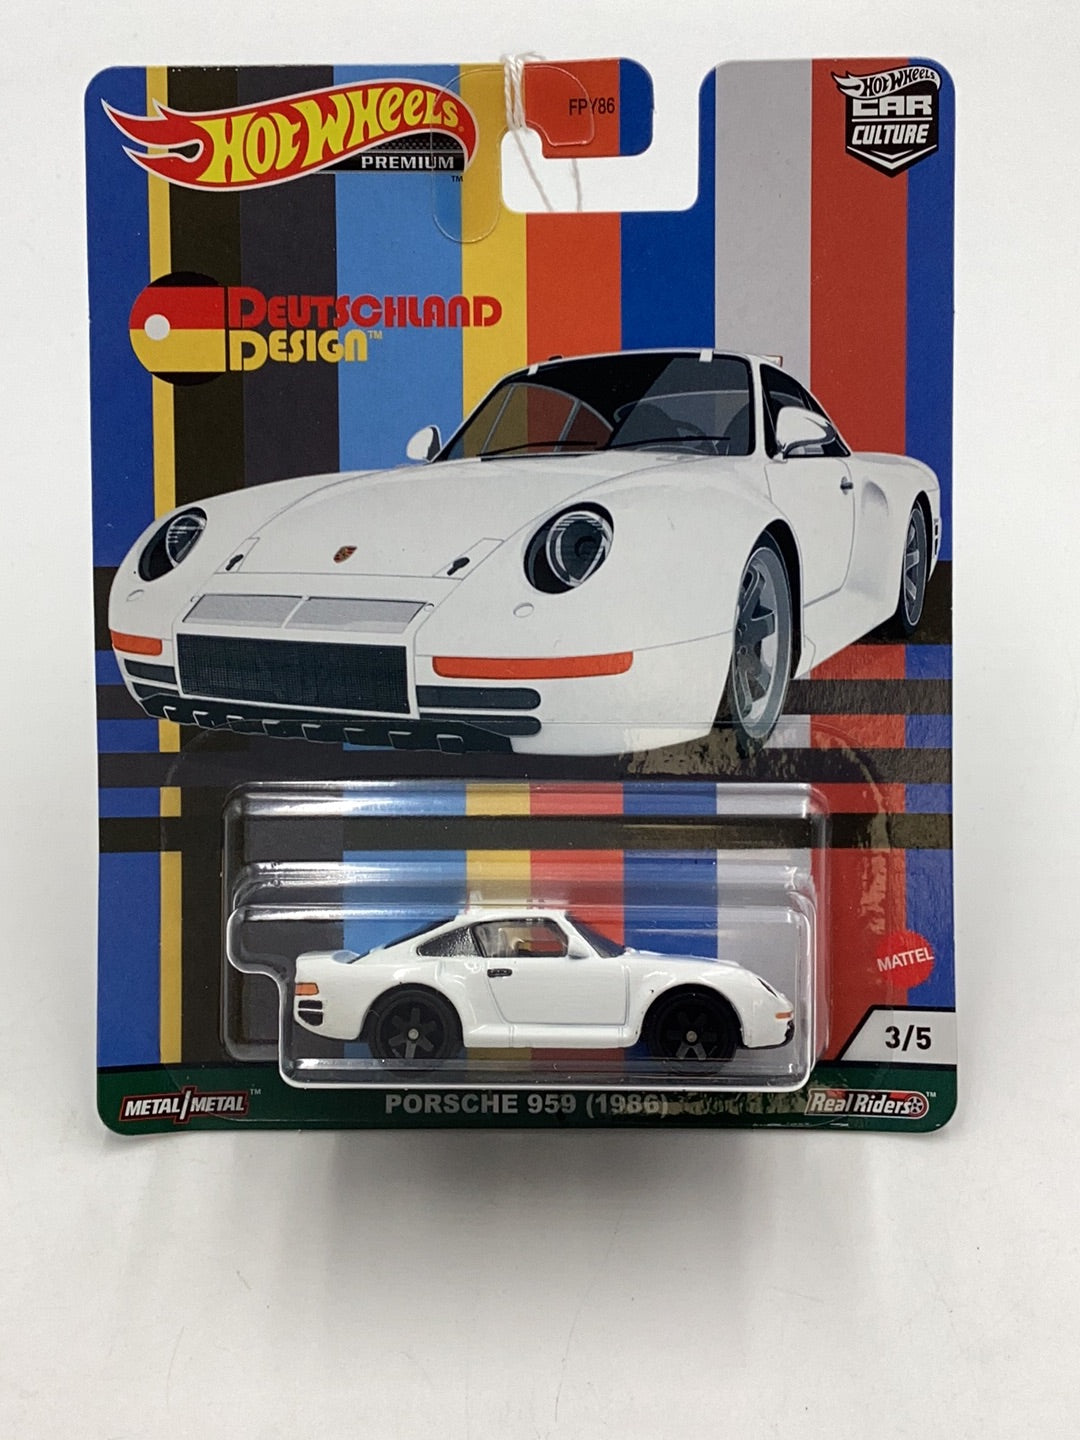 Hot wheels car culture Deutschland Design Porsche 959 (1986) 3/5 254I